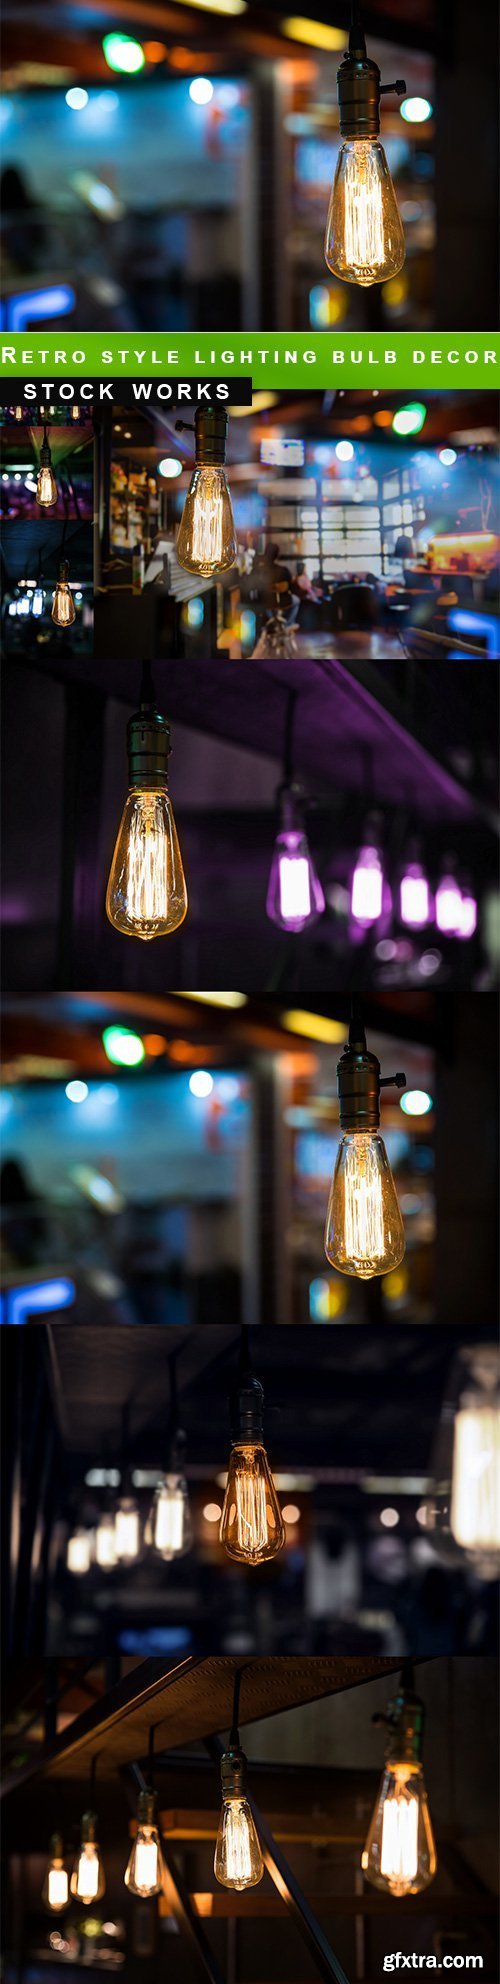 Retro style lighting bulb decor